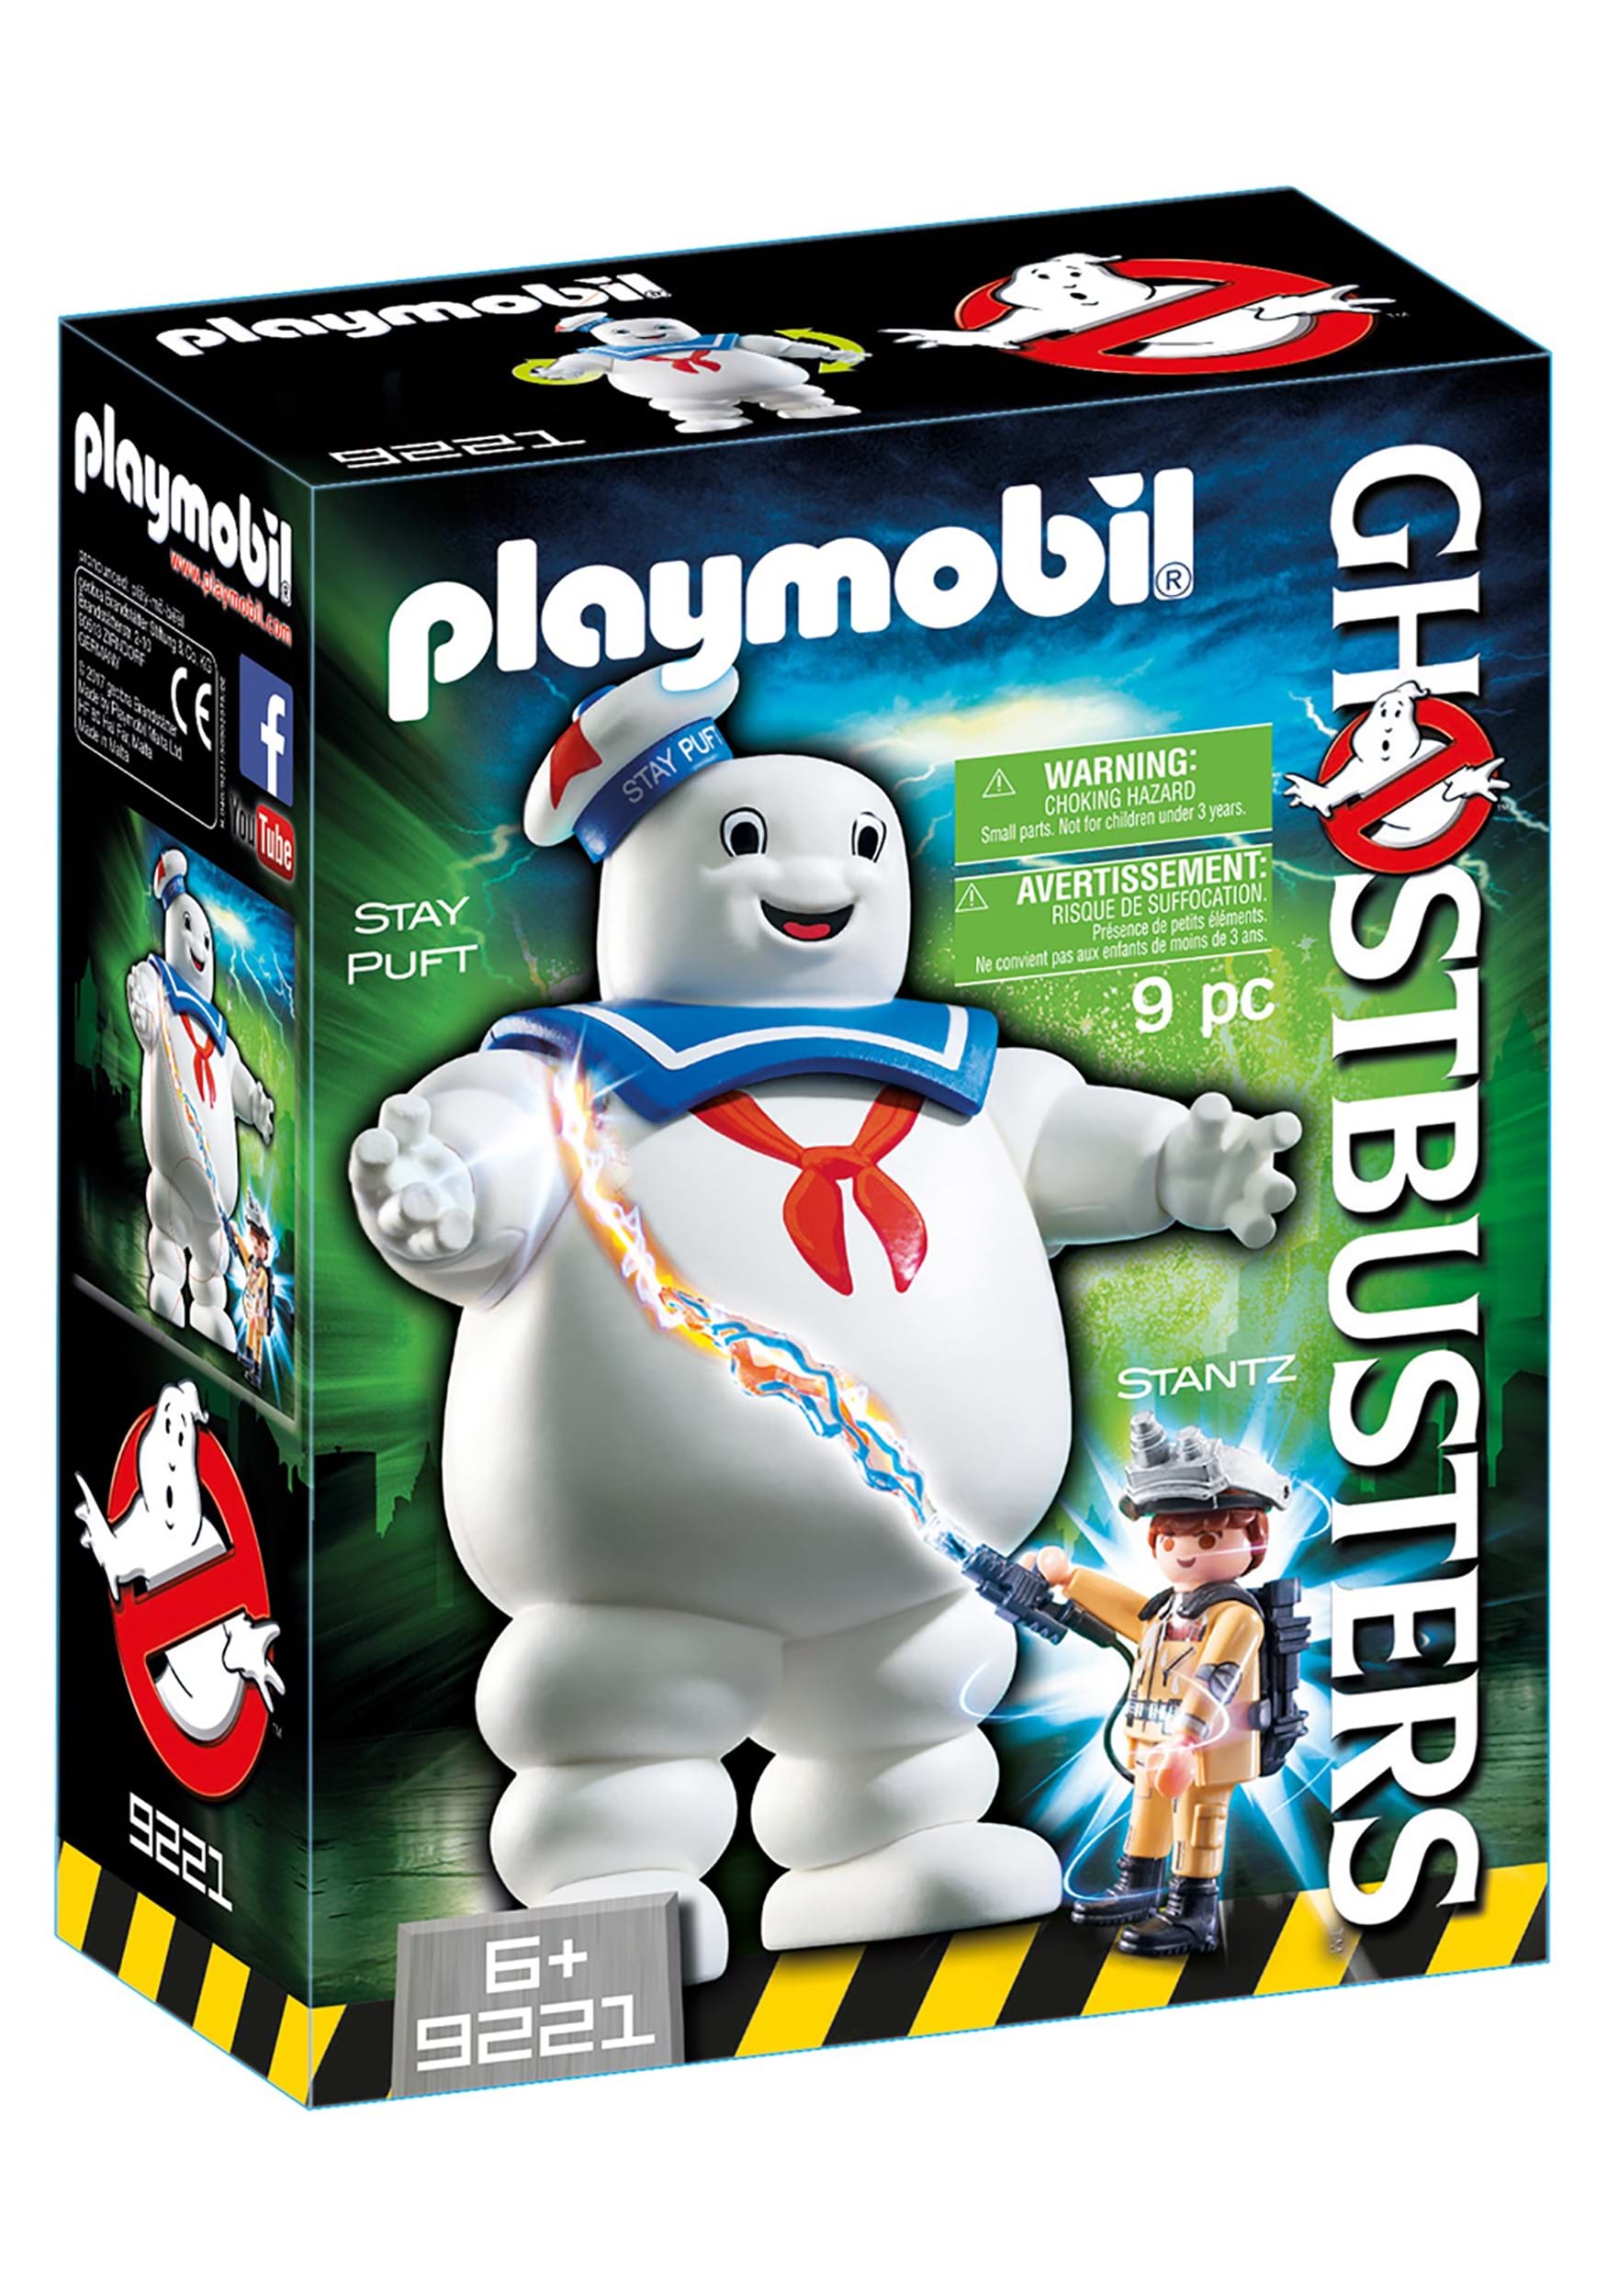 Playmobil Stay Puft Marshmallow Man Set